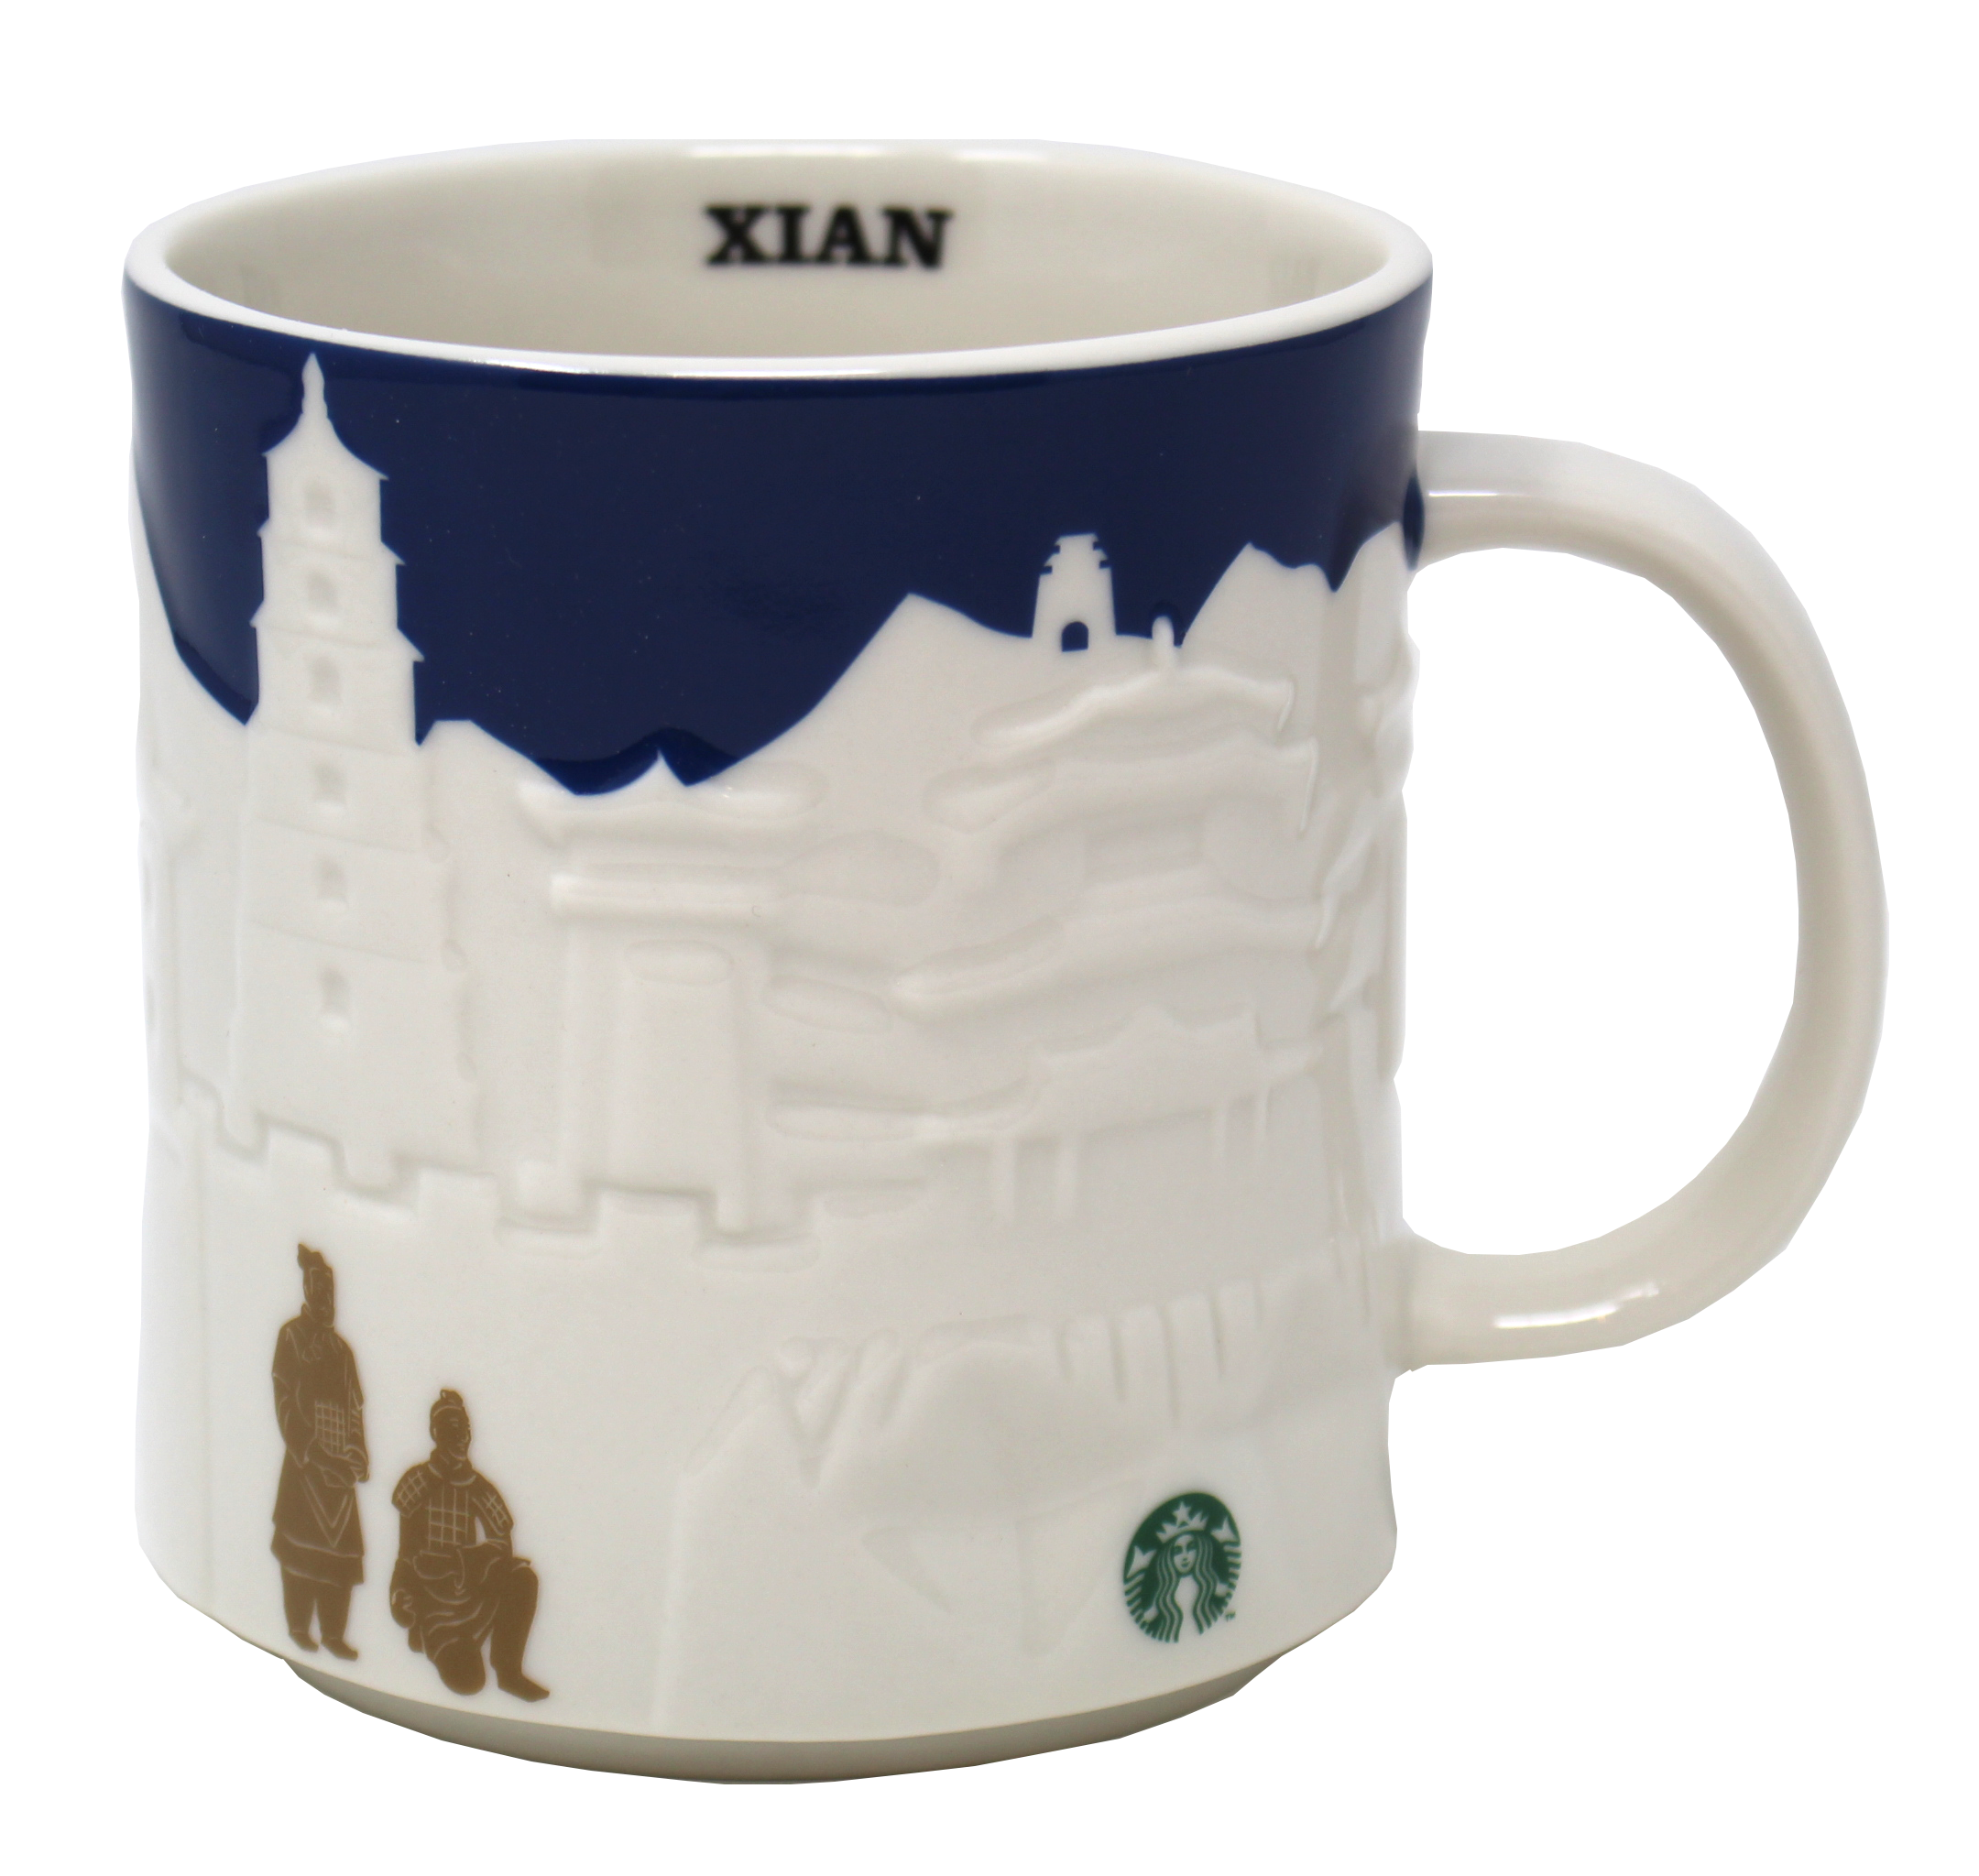 Starbucks Collector Relief Series Xi'An Ceramic Mug, 16 Oz